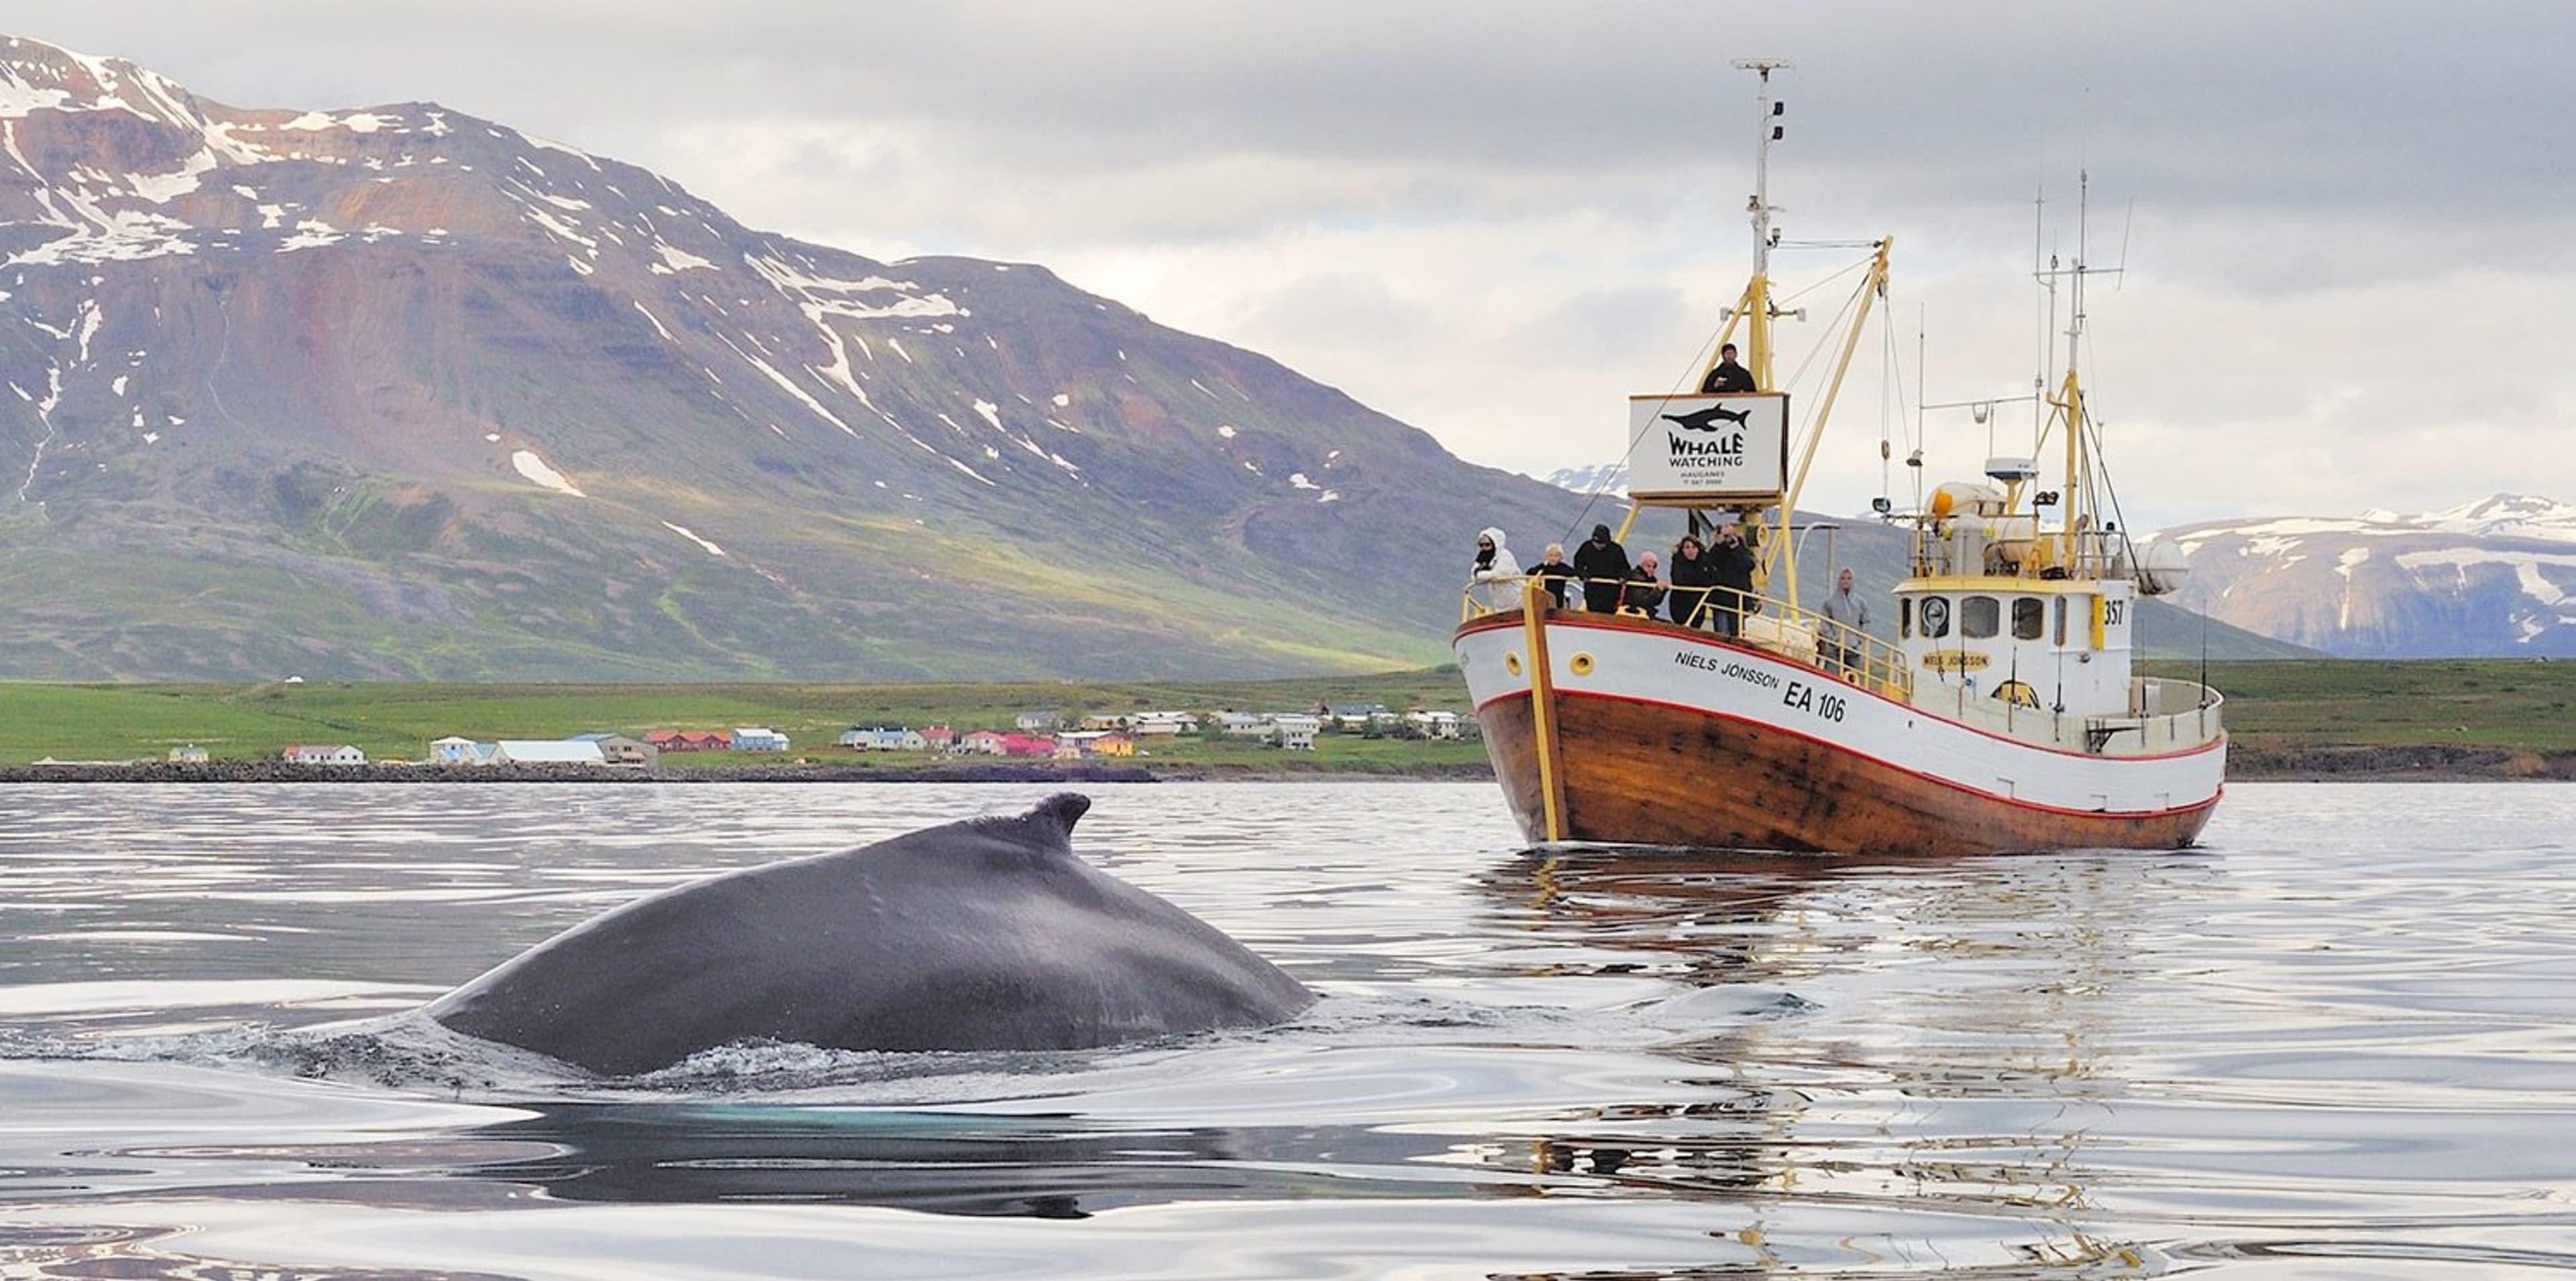 Hauganes whale watching with beautiful seashore